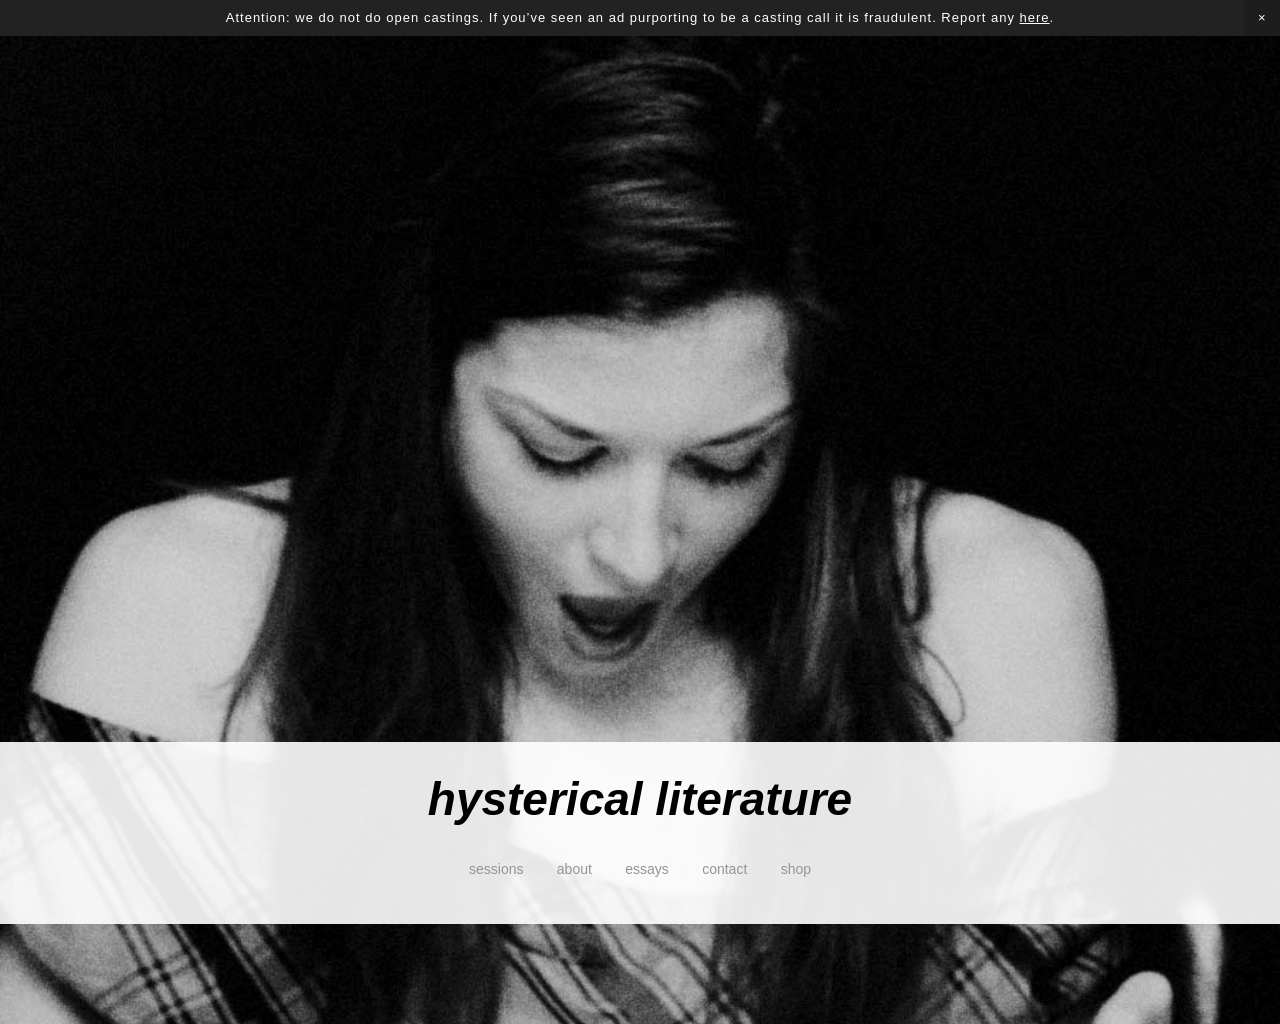 hystericalliterature.com